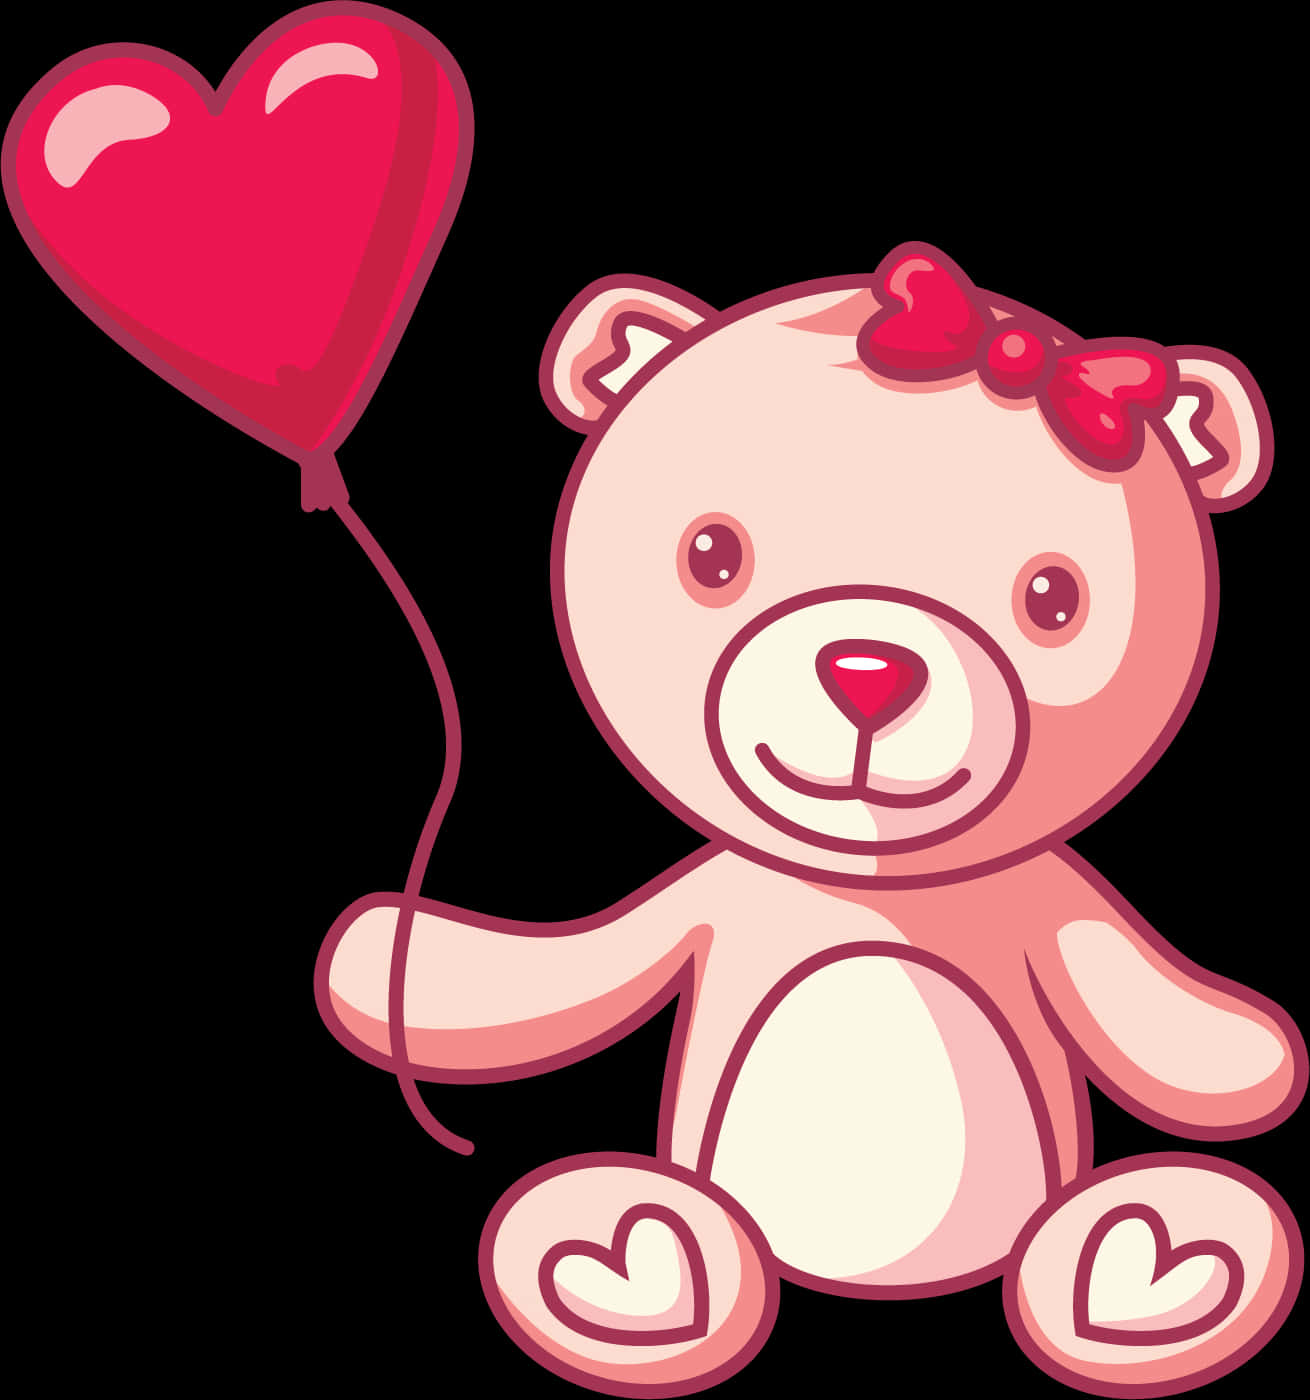 Cute Teddy Bear With Heart Balloon PNG